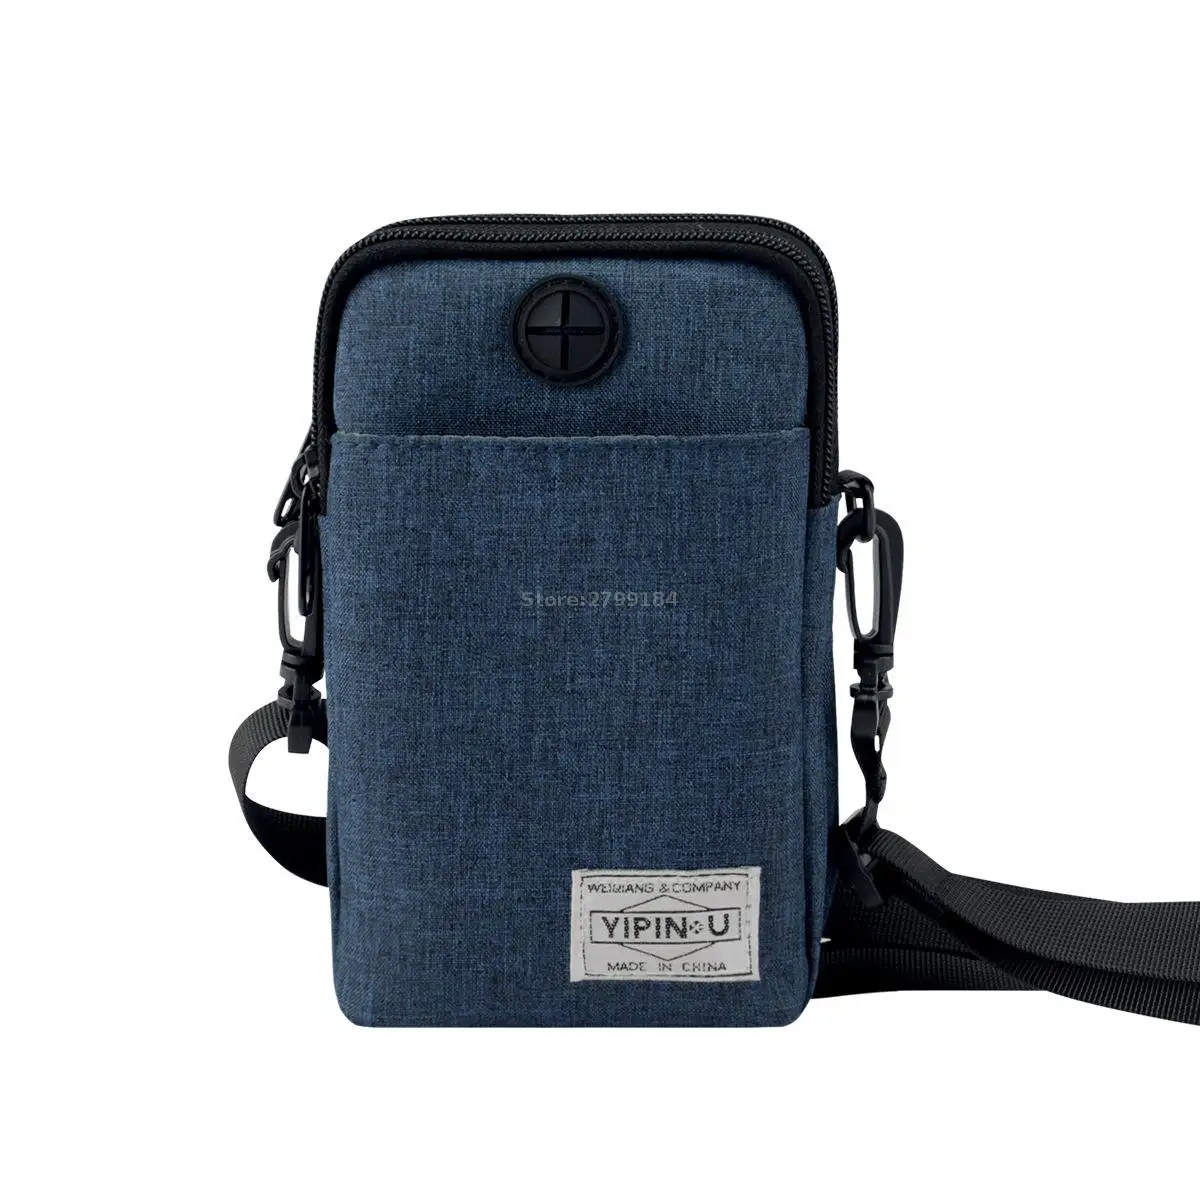 YIPINU multifunctional waterproof outdoor phone bag Anti-theft Security sport mini bag Wallet ID Holder Passport Holder Neck Bag